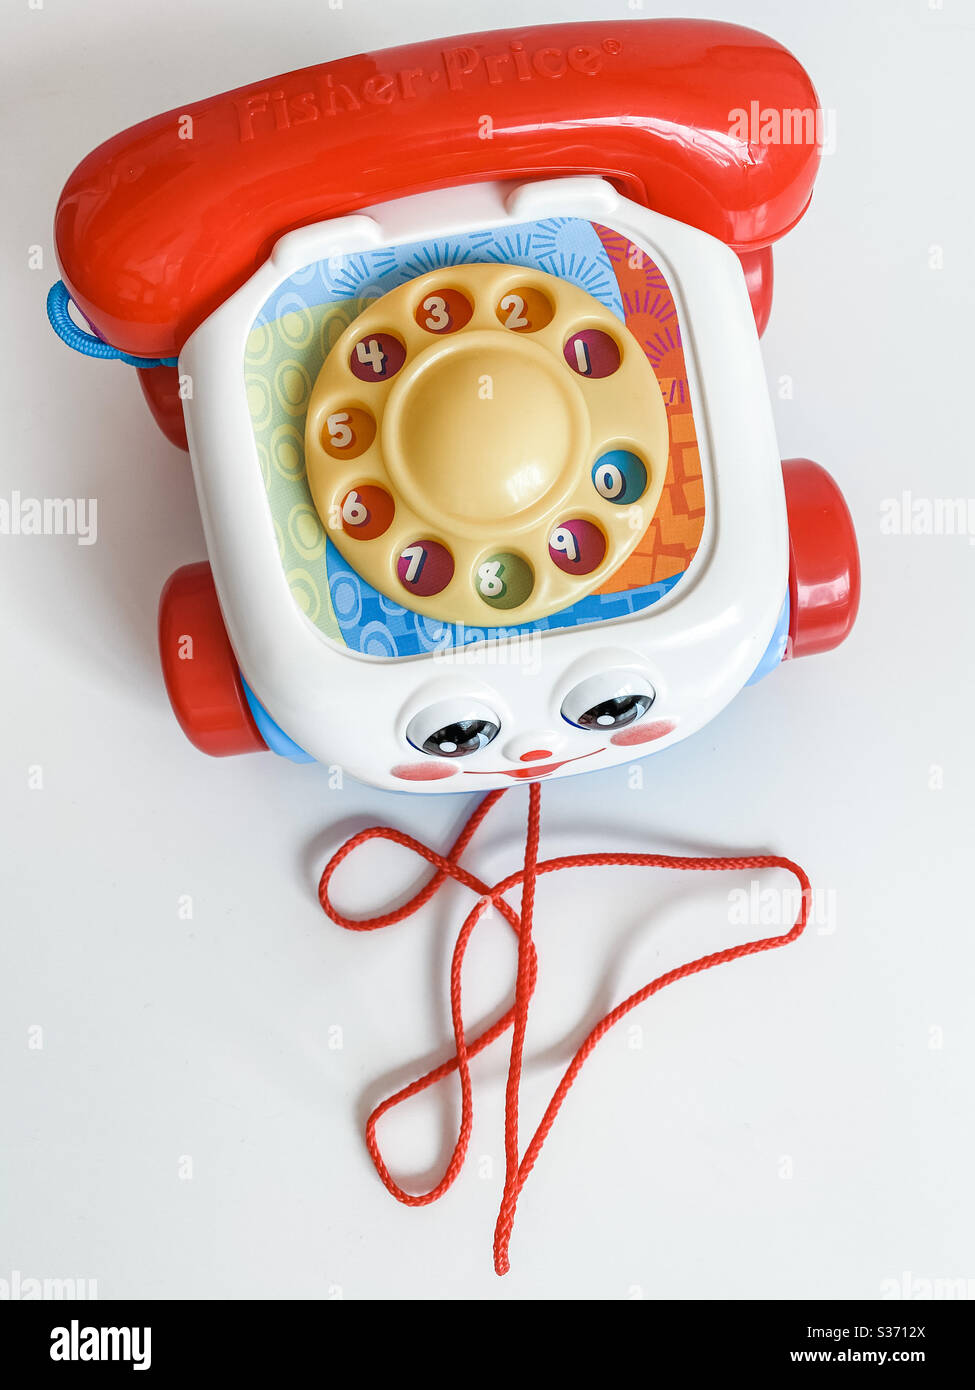 Vintage Fisher Price toy phone Stock Photo